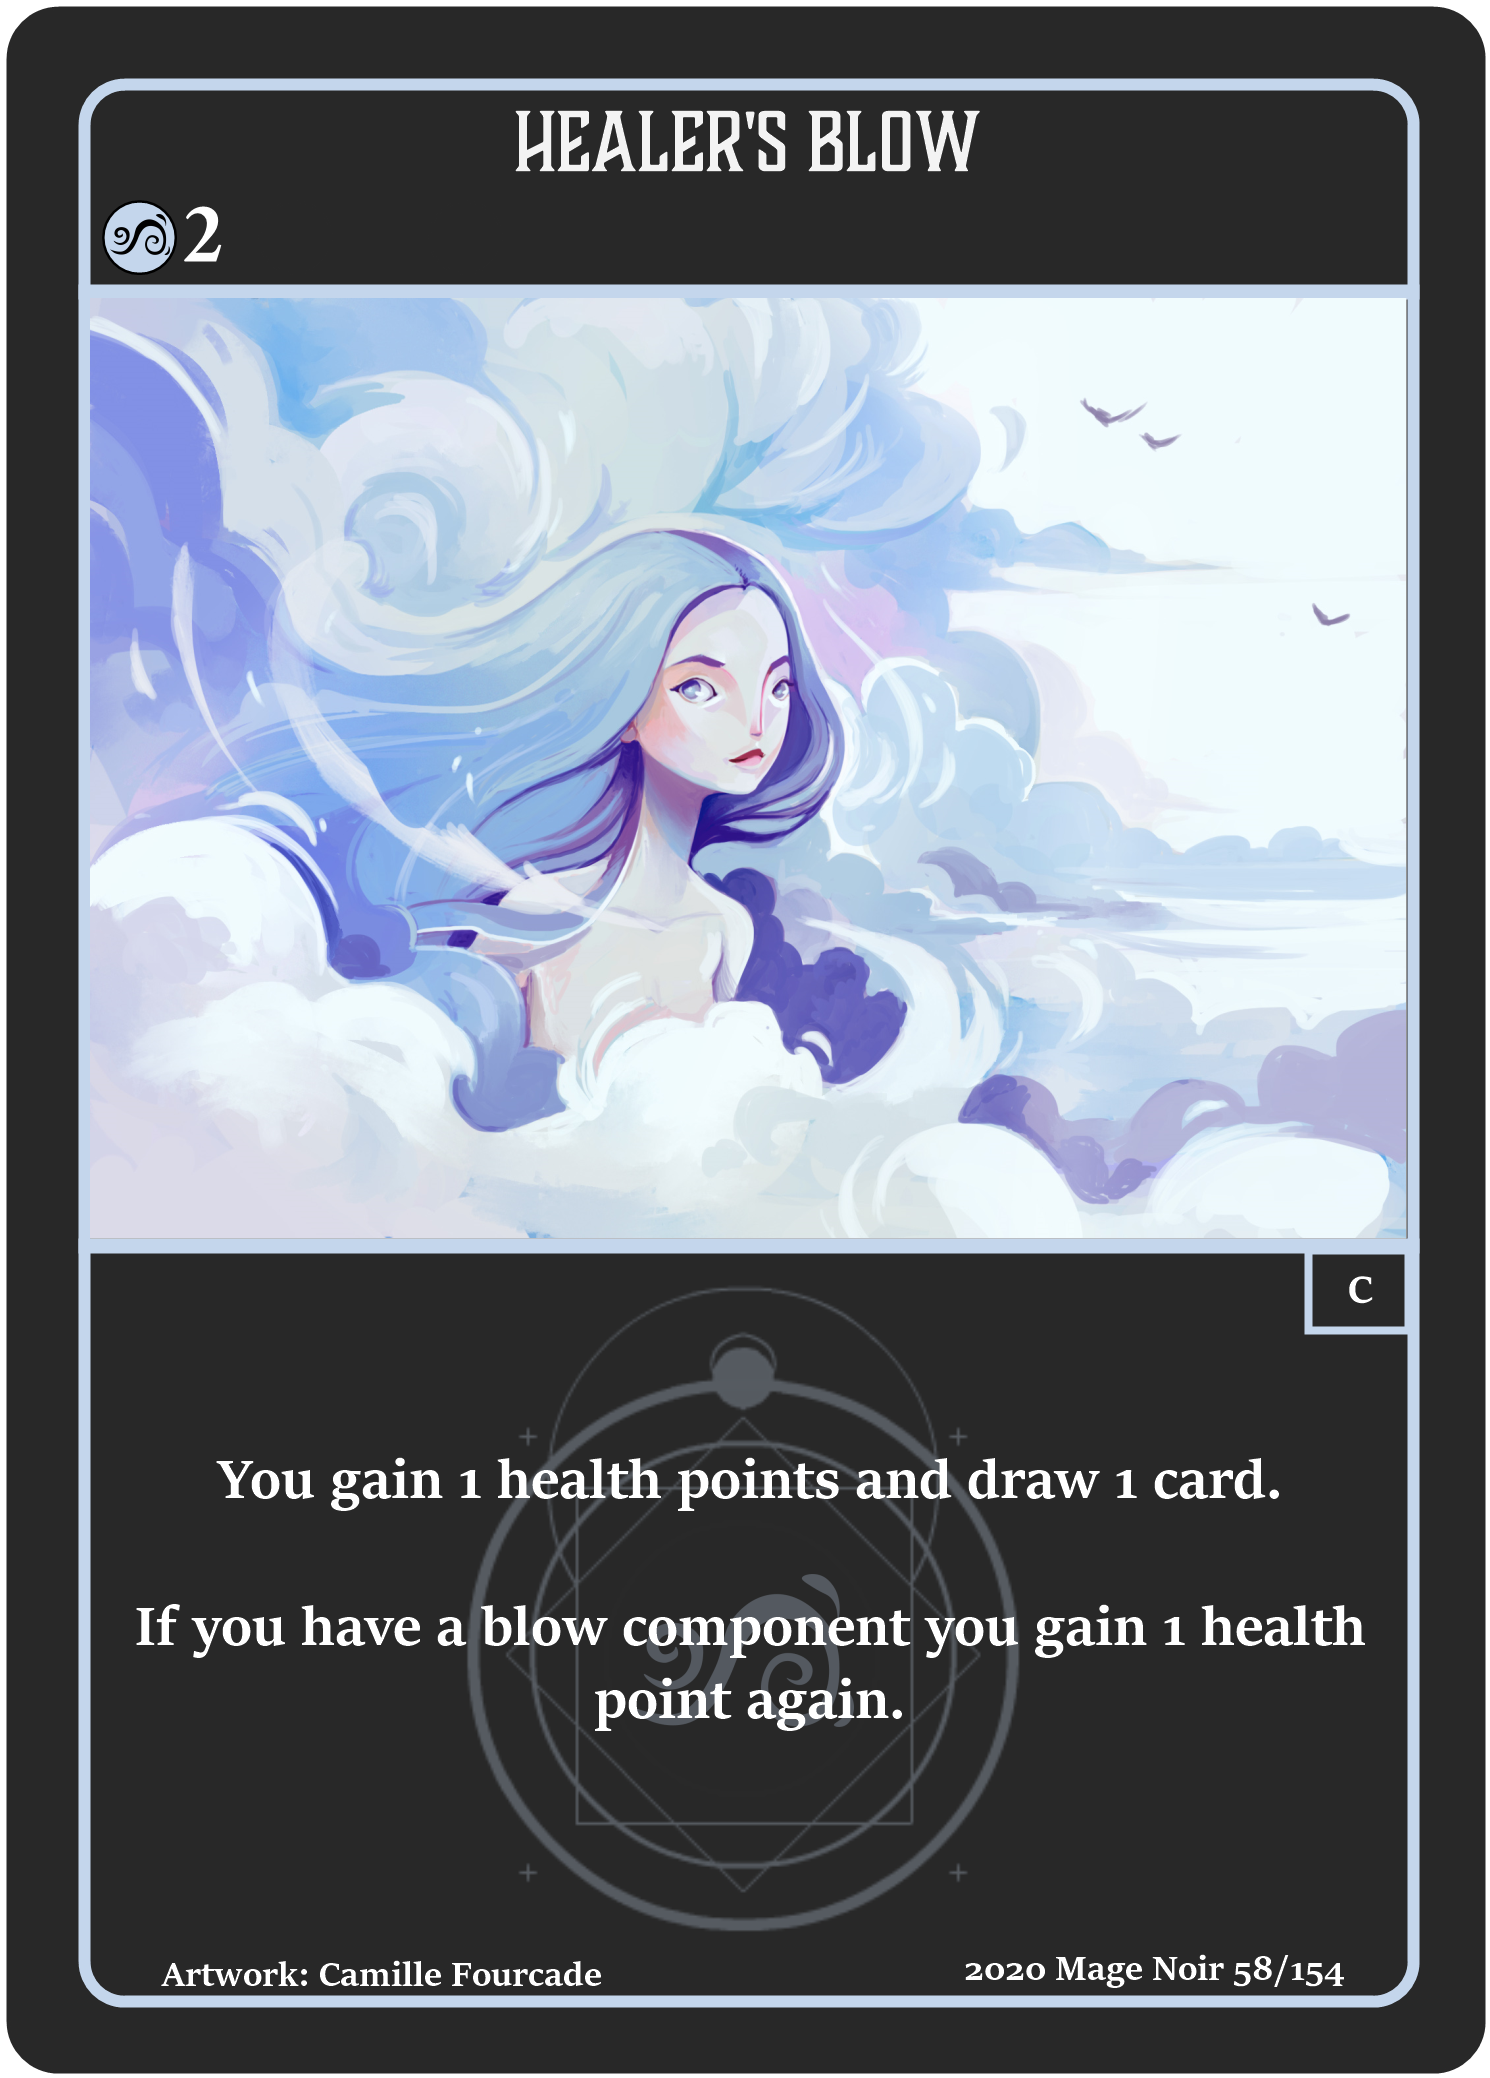 Healer's blow card